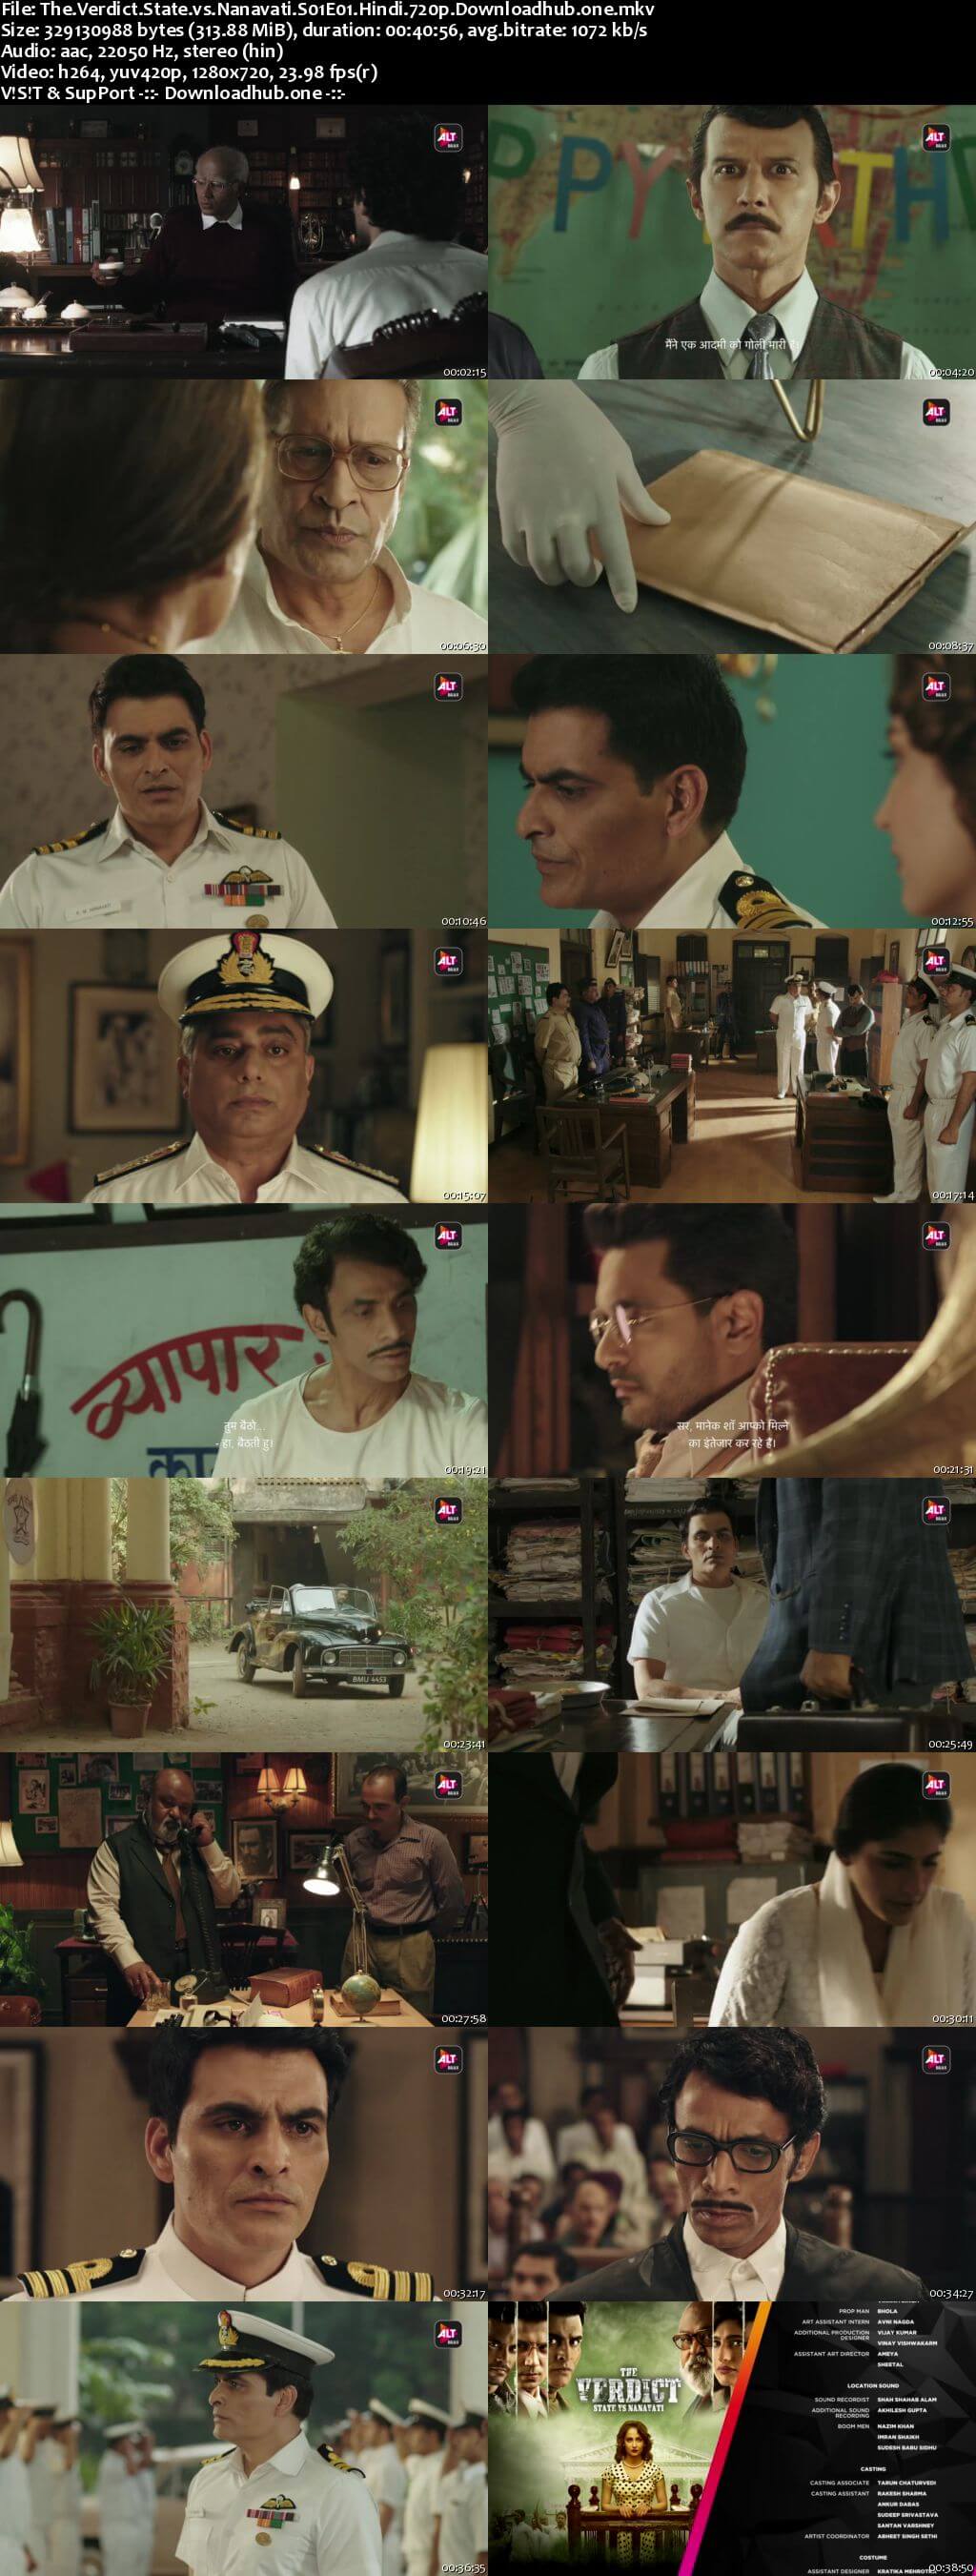 The Verdict State Vs Nanavati 2019 Hindi Season 01 Complete 720p 480p HDRip ESubs